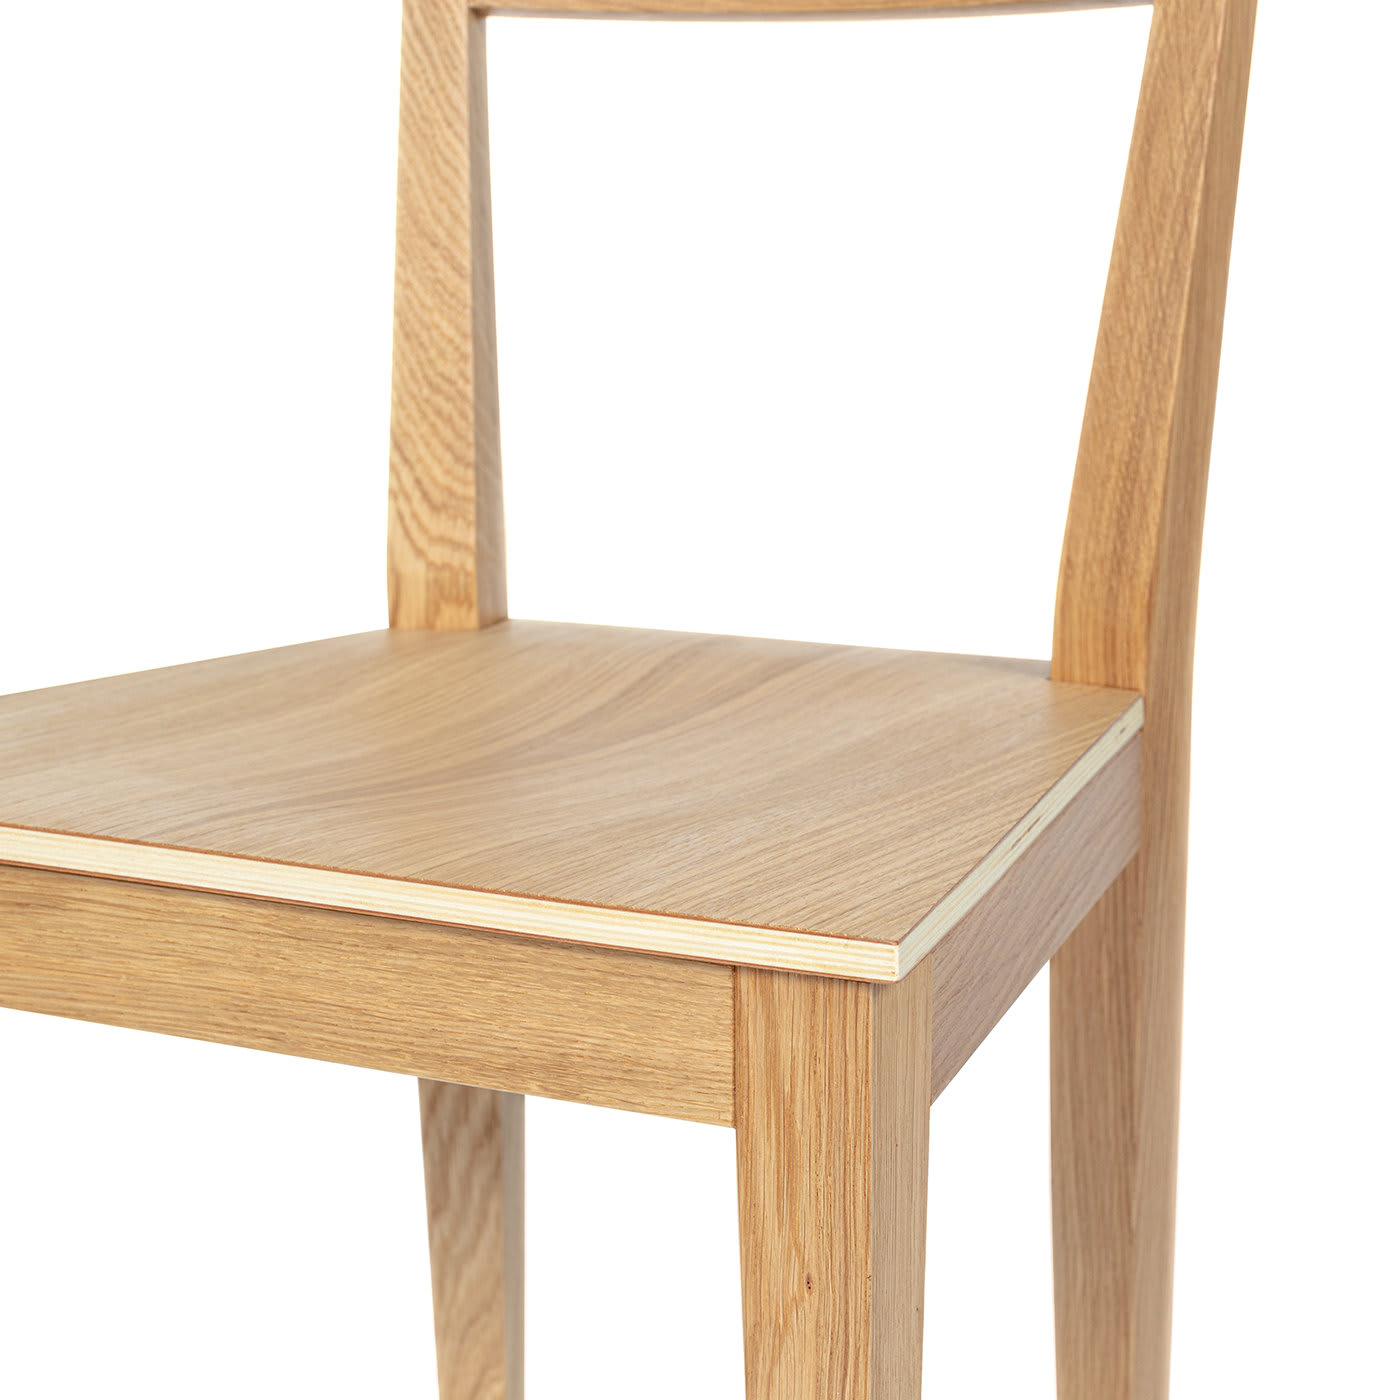 Set of 2 Umbra Oak Chairs - Disegno Mobile